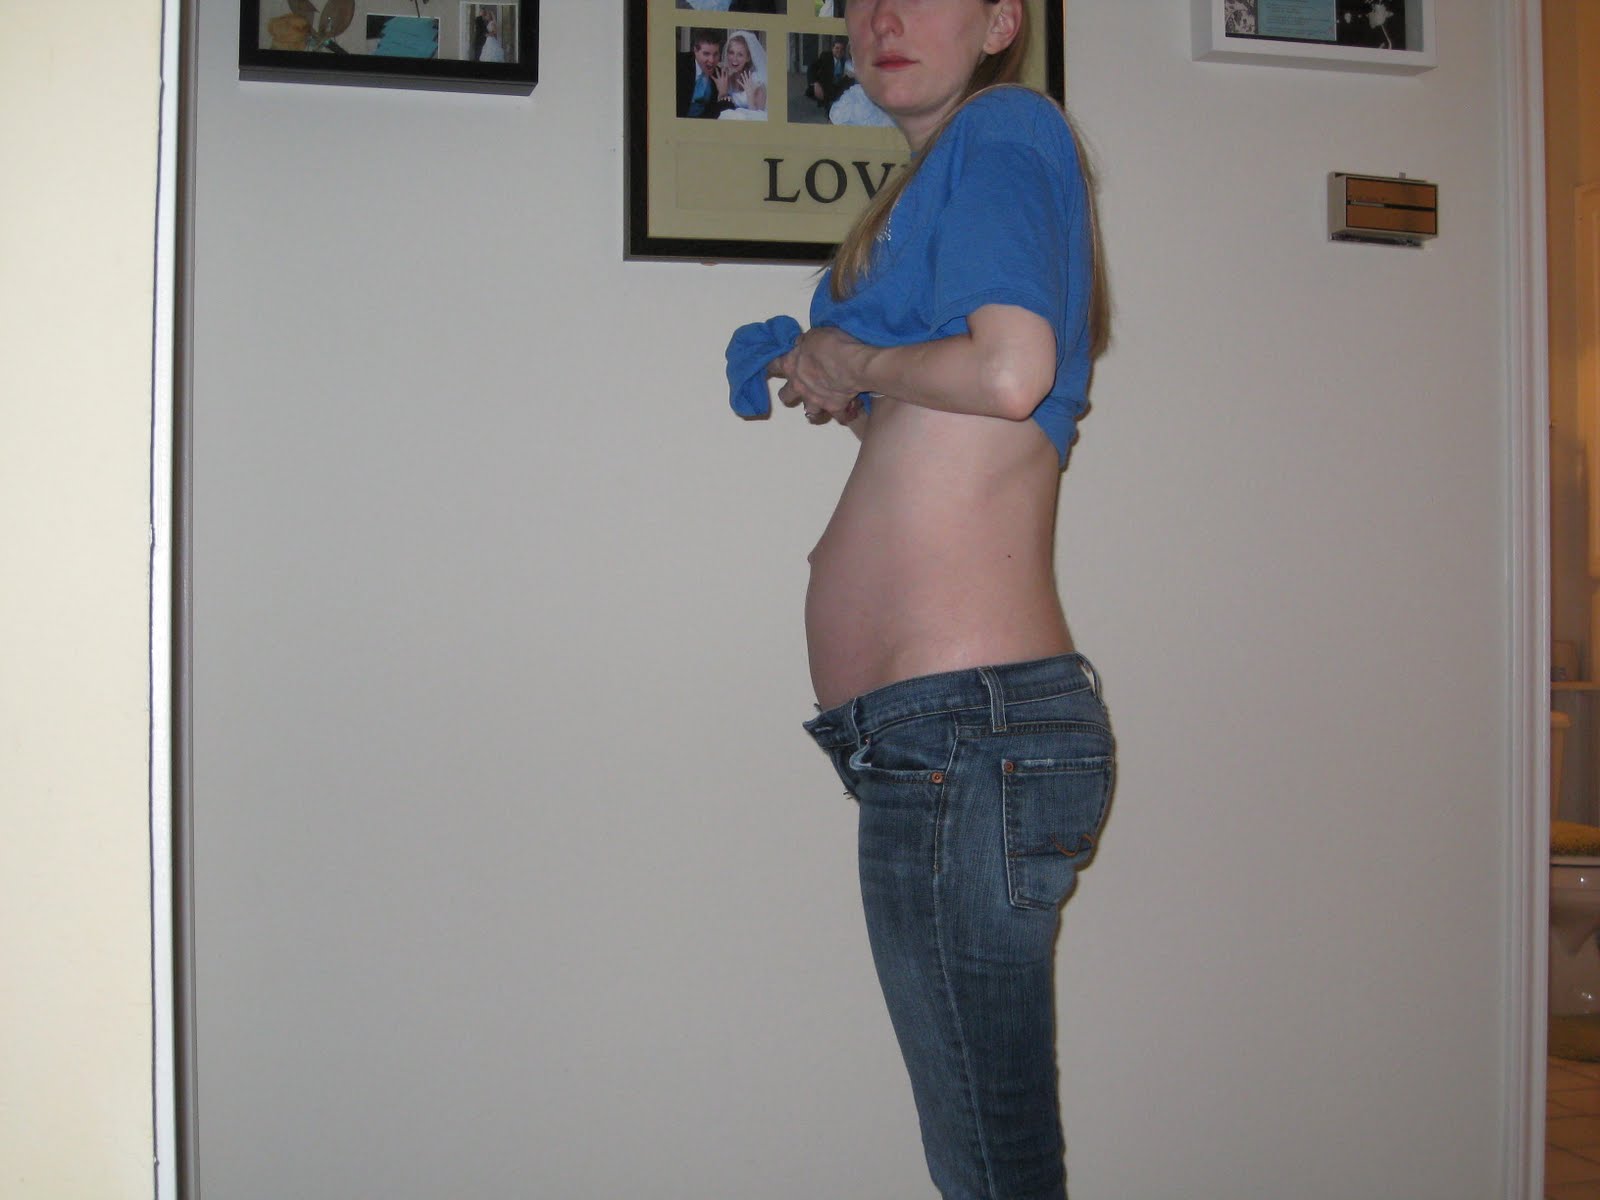 23 недели живот форум. Живот на 23 неделе беременности. Беременность 23 акушерские недели живот. Животик на 23 неделе беременности. Живот на 23 неделе беременности мальчиком.